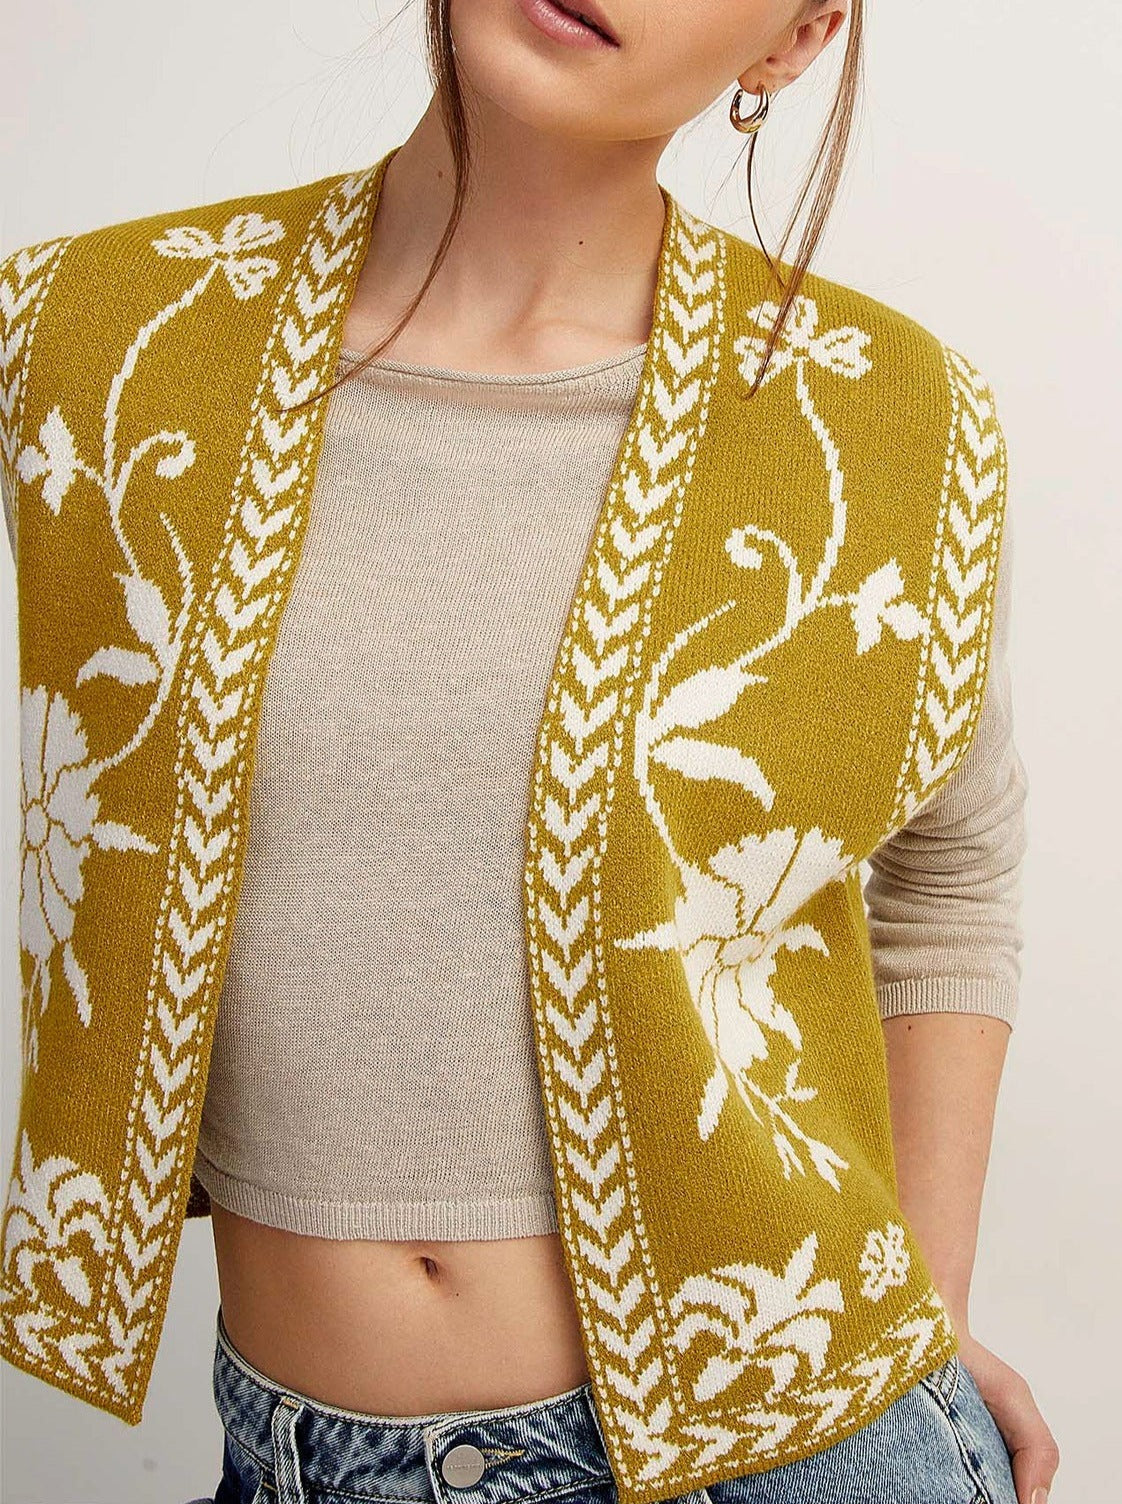 NTG Fad TOP Gold / S Sleeveless designer knitted vest top